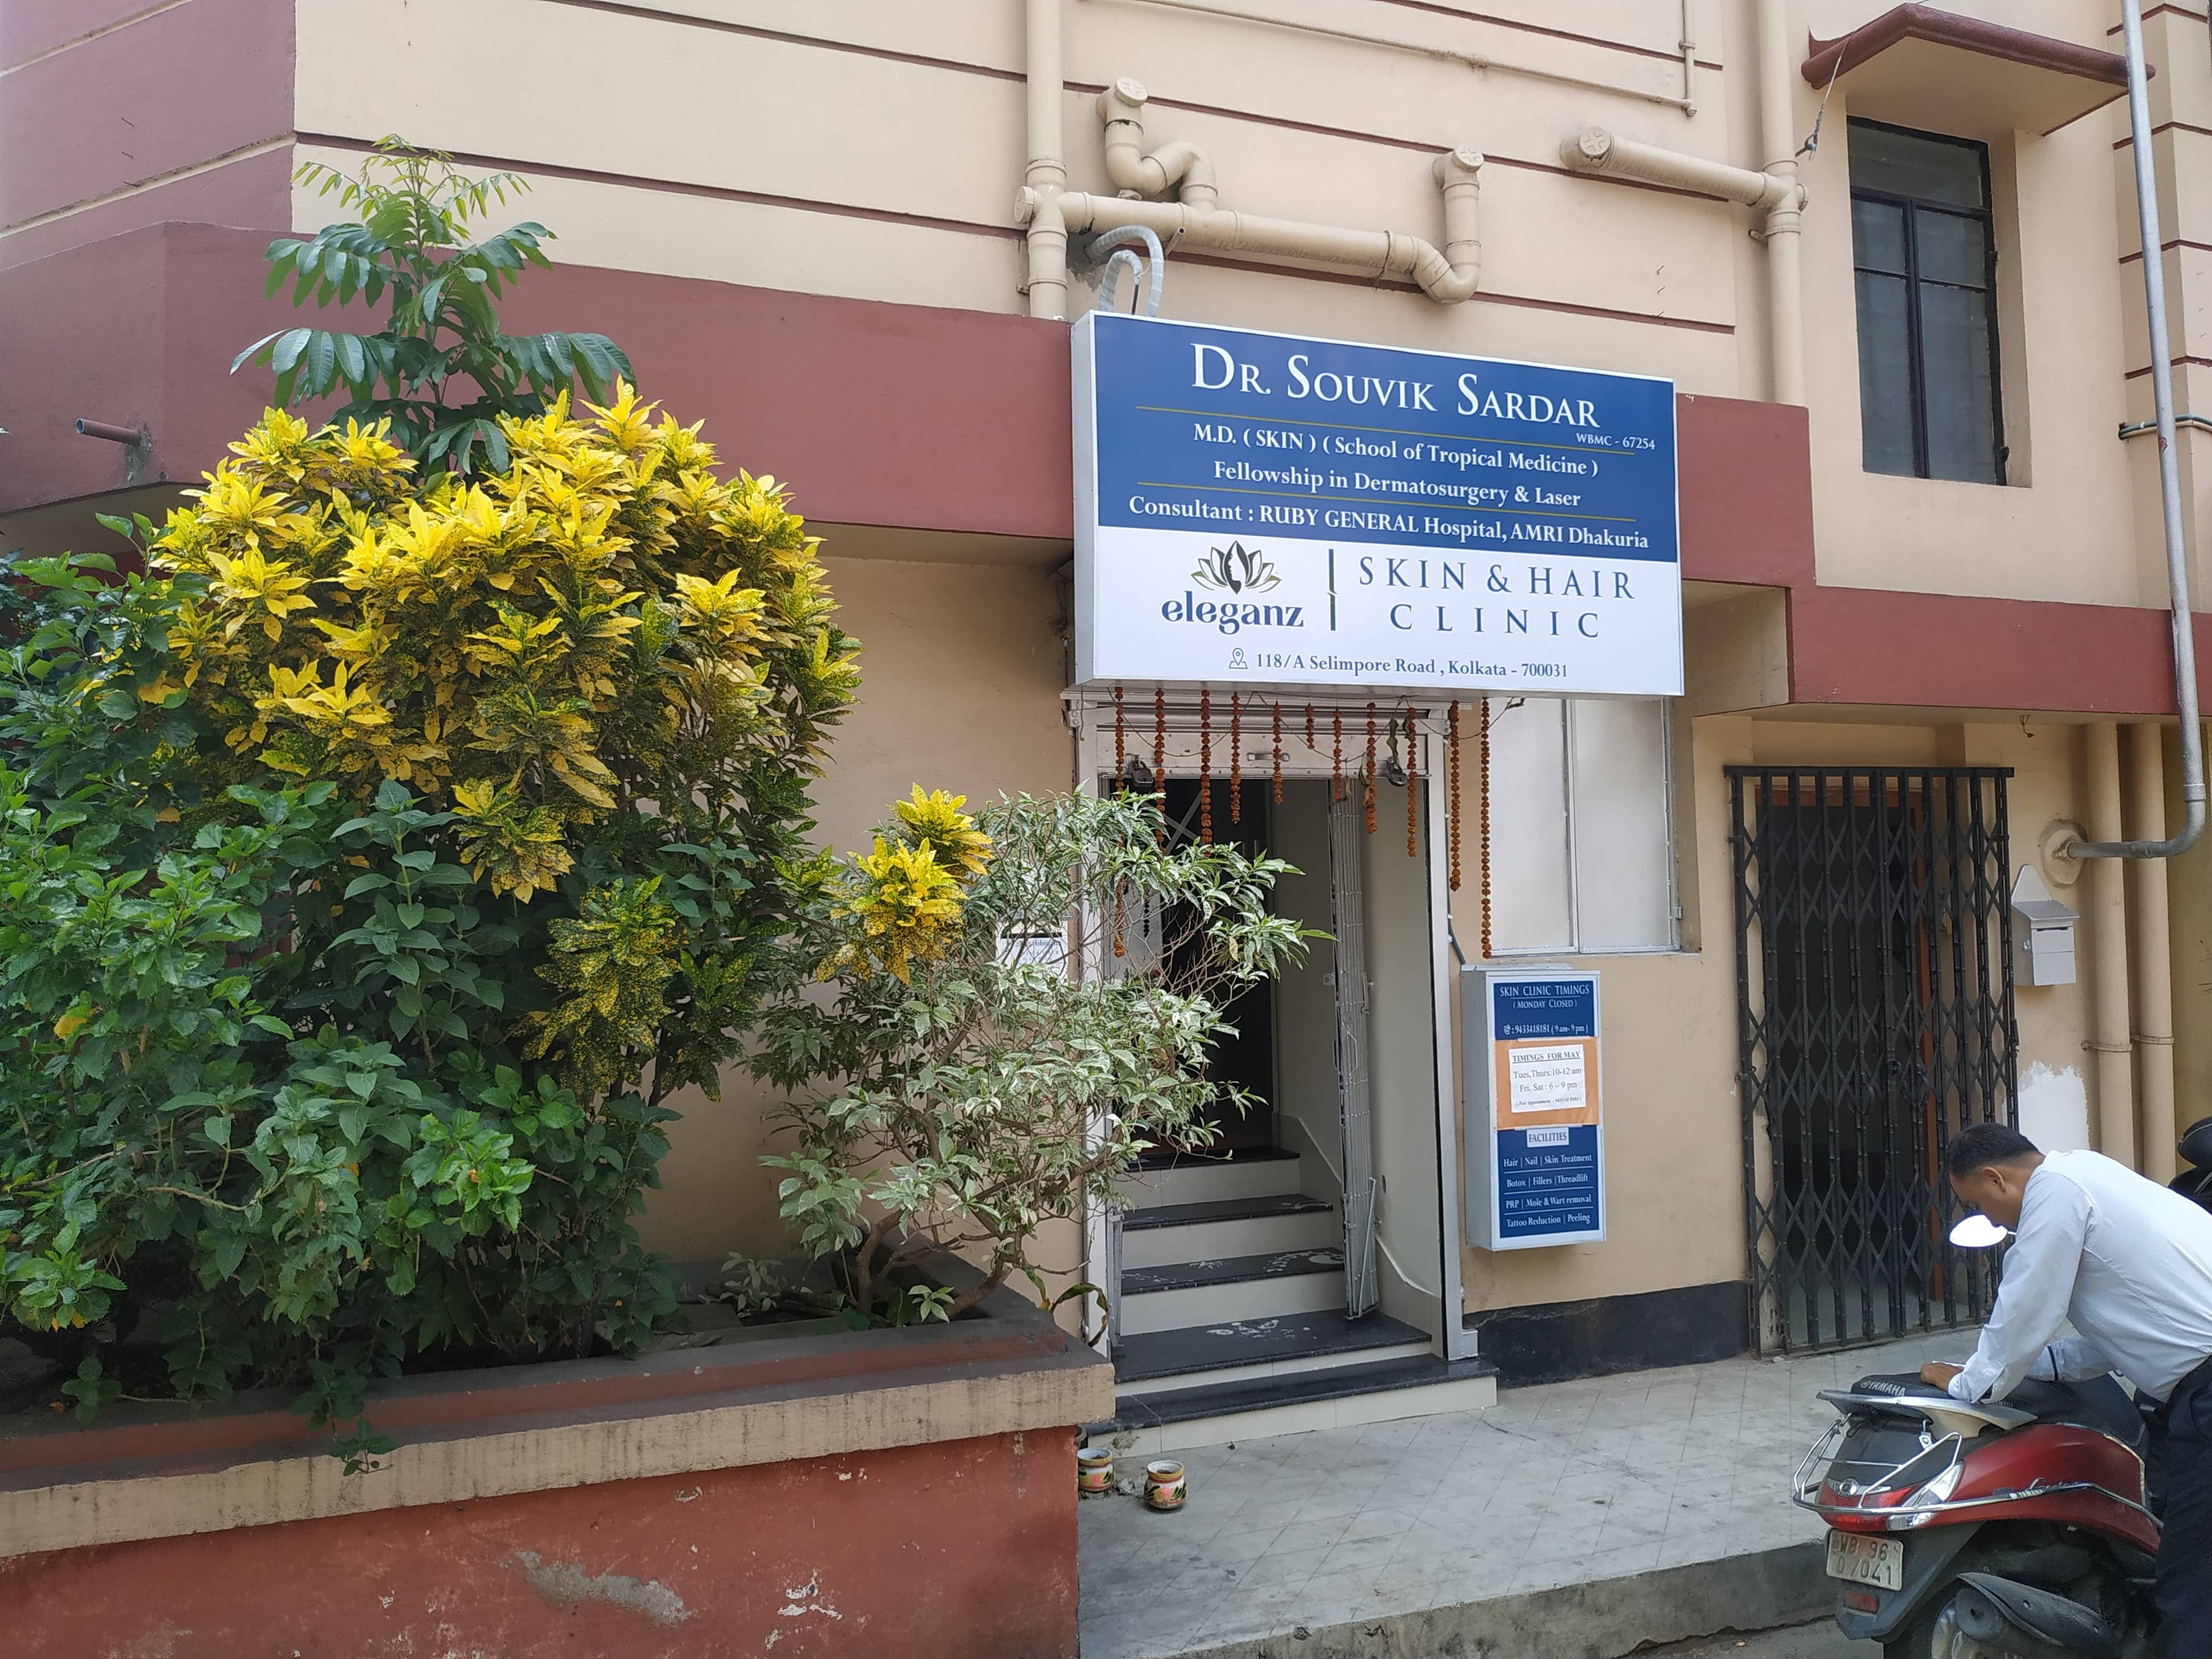 Eleganz Skin & Hair Clinic in Dhakuria, Kolkata - Book Appointment, View  Contact Number, Feedbacks, Address | Dr. Souvik Sardar